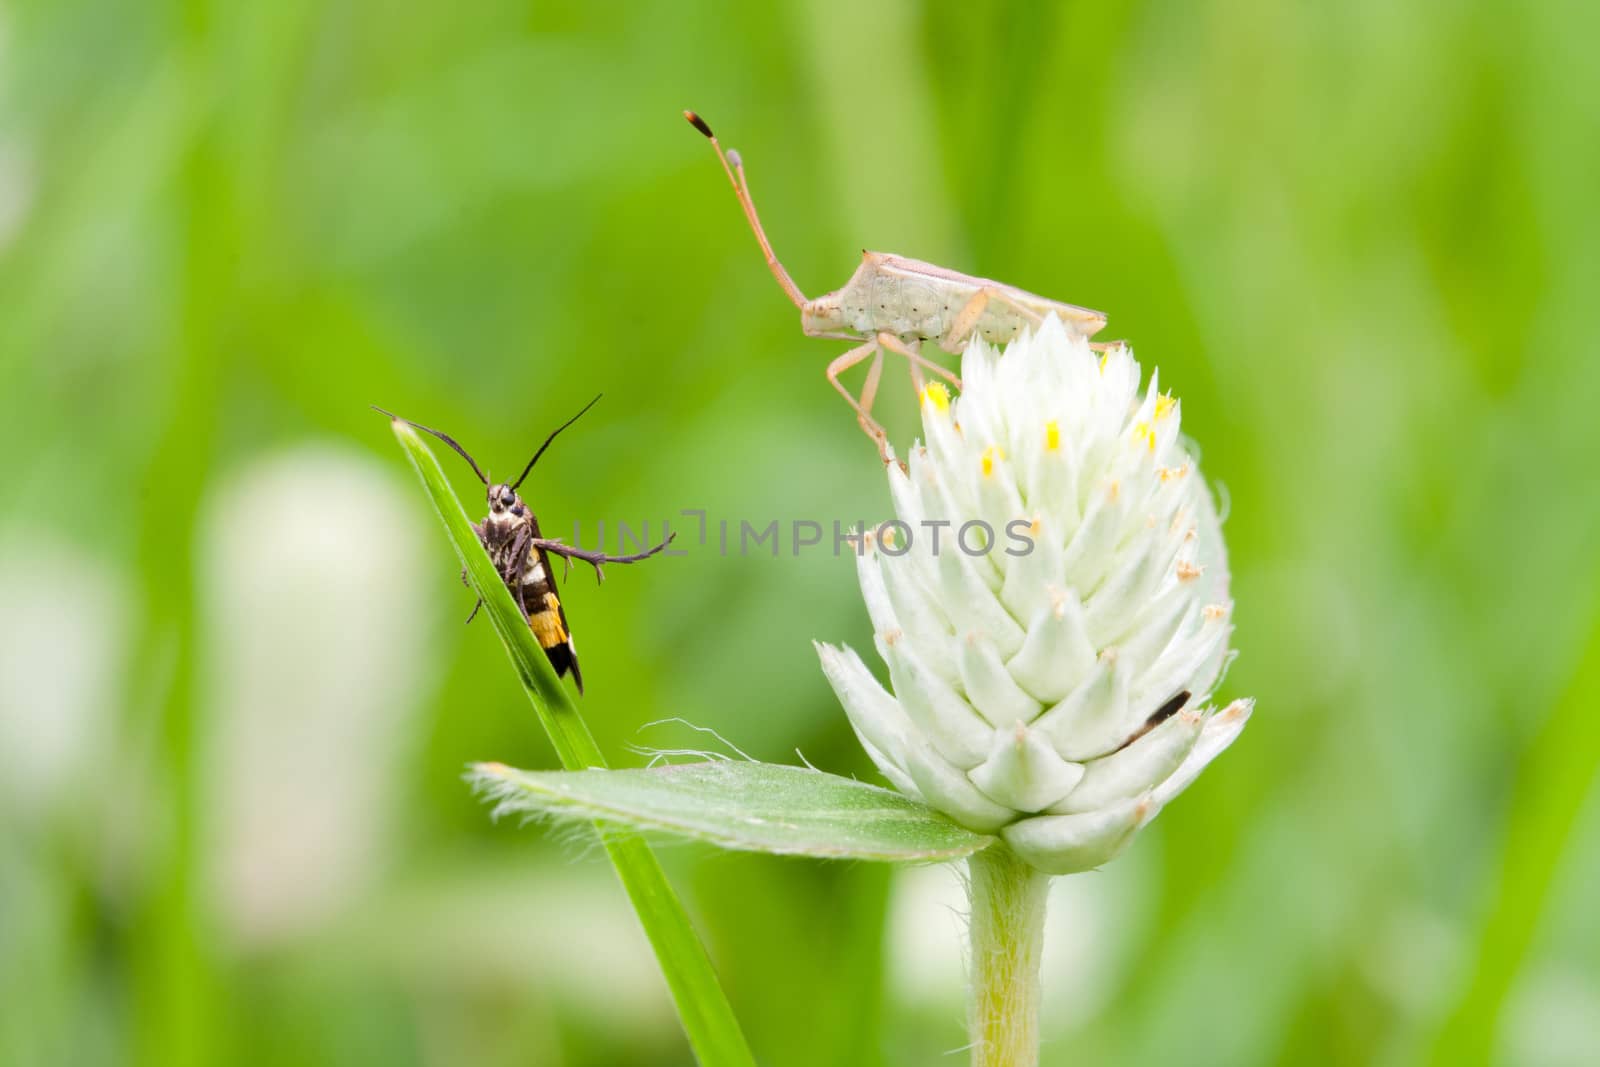 2 bugs on the Amaranth flower